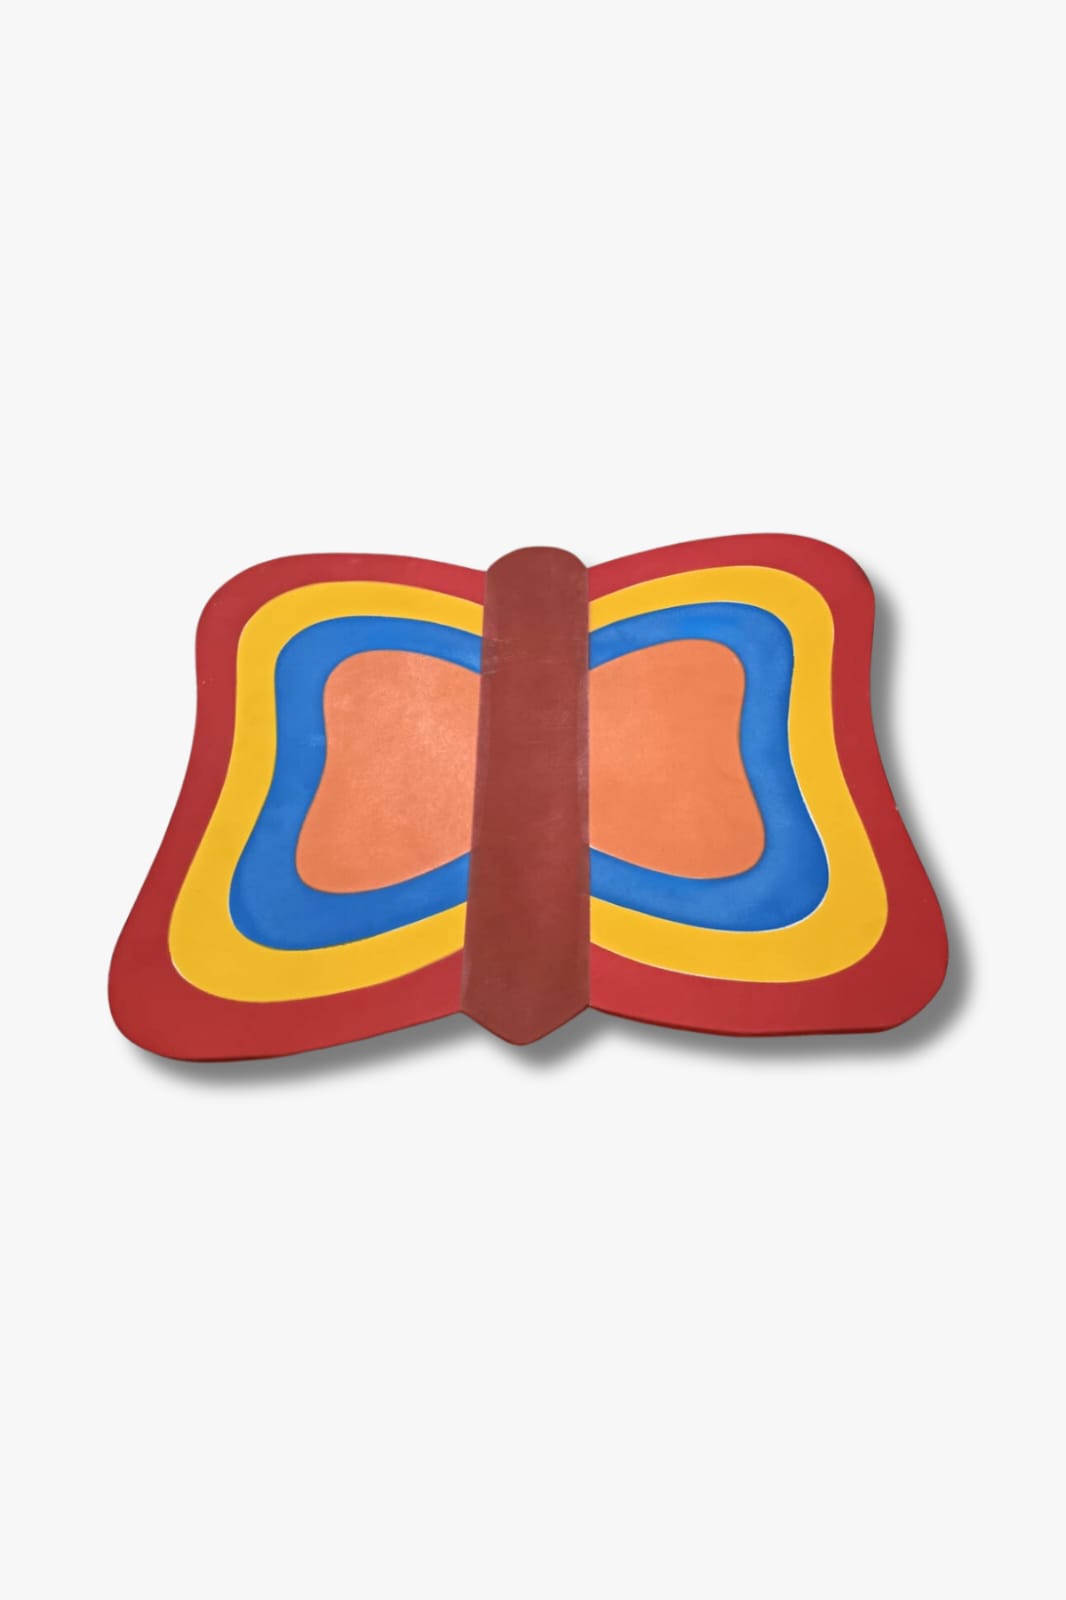 Butterfly Wooden Balance Board for Kids